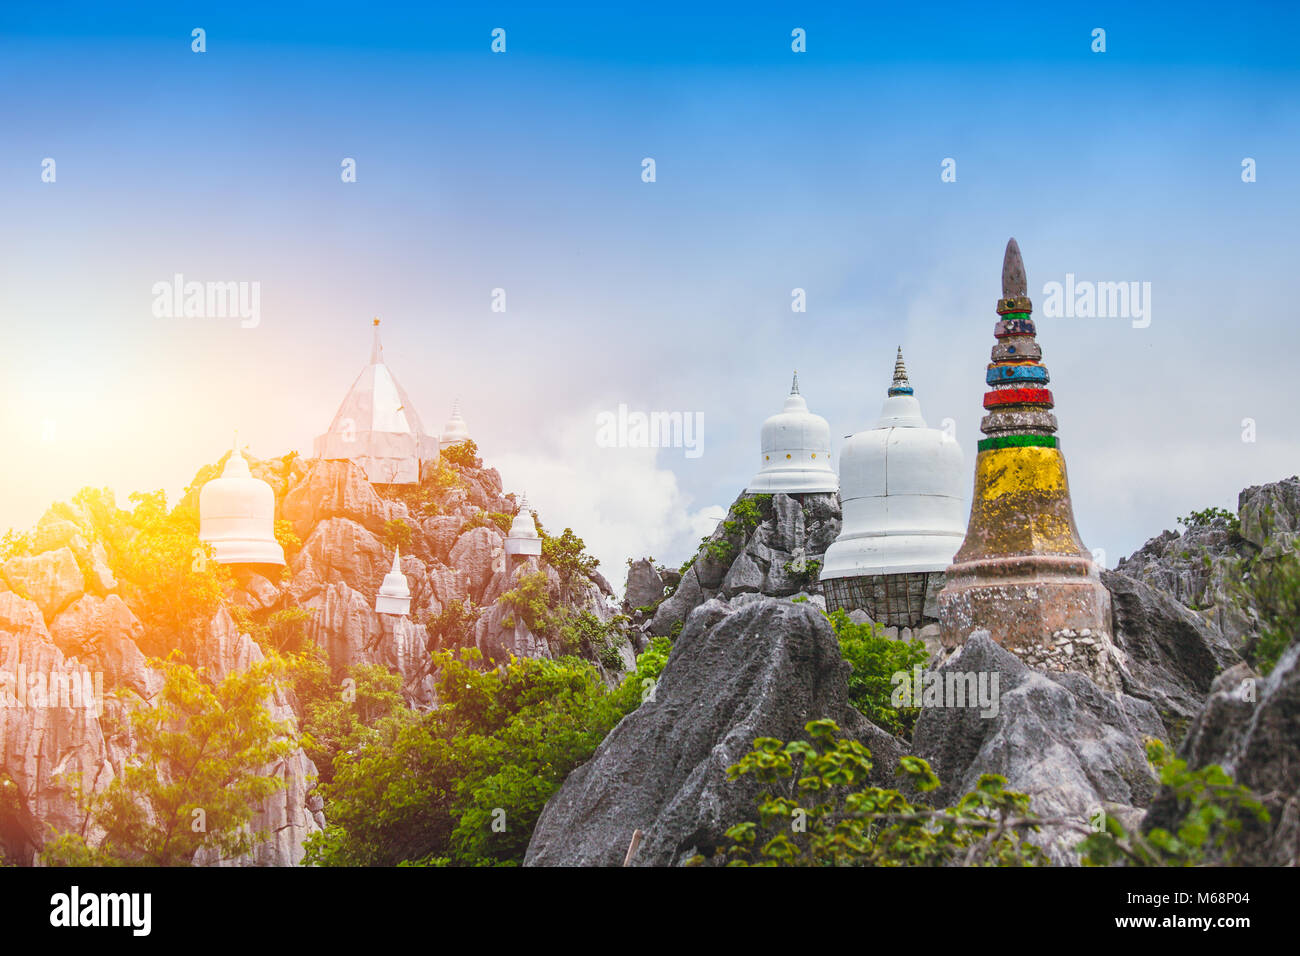 Berg Tempel in Lampang Thailand reise Lage im Wat Prajomklao Rachanusorn. Stockfoto